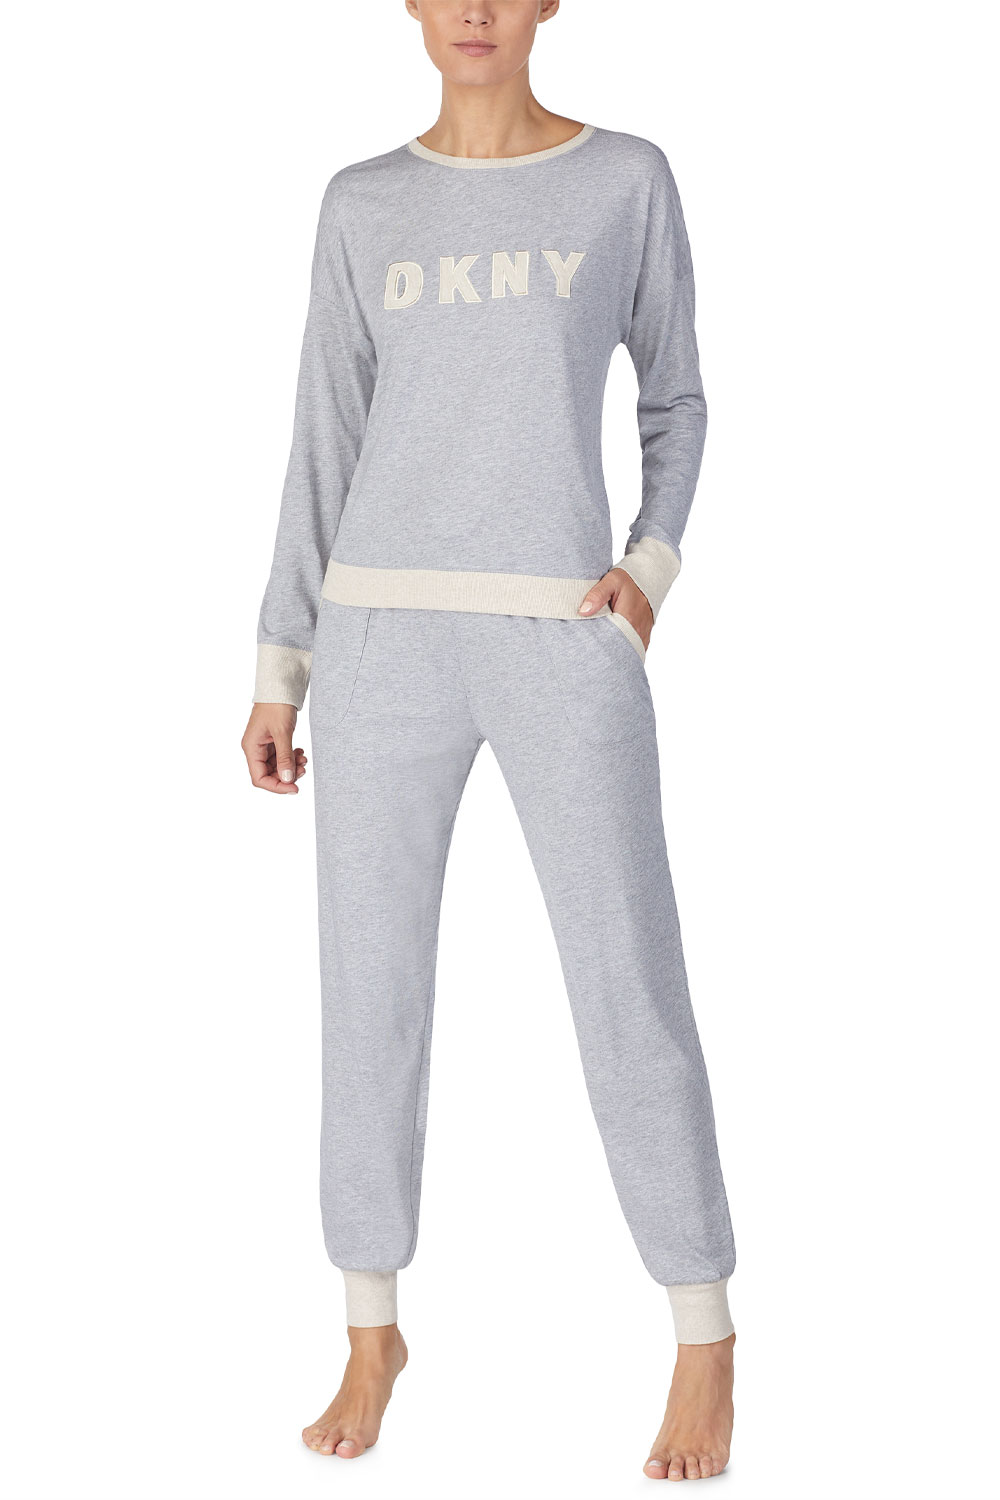 DKNY Top & Jogger Set New Signature 44 grau günstig online kaufen